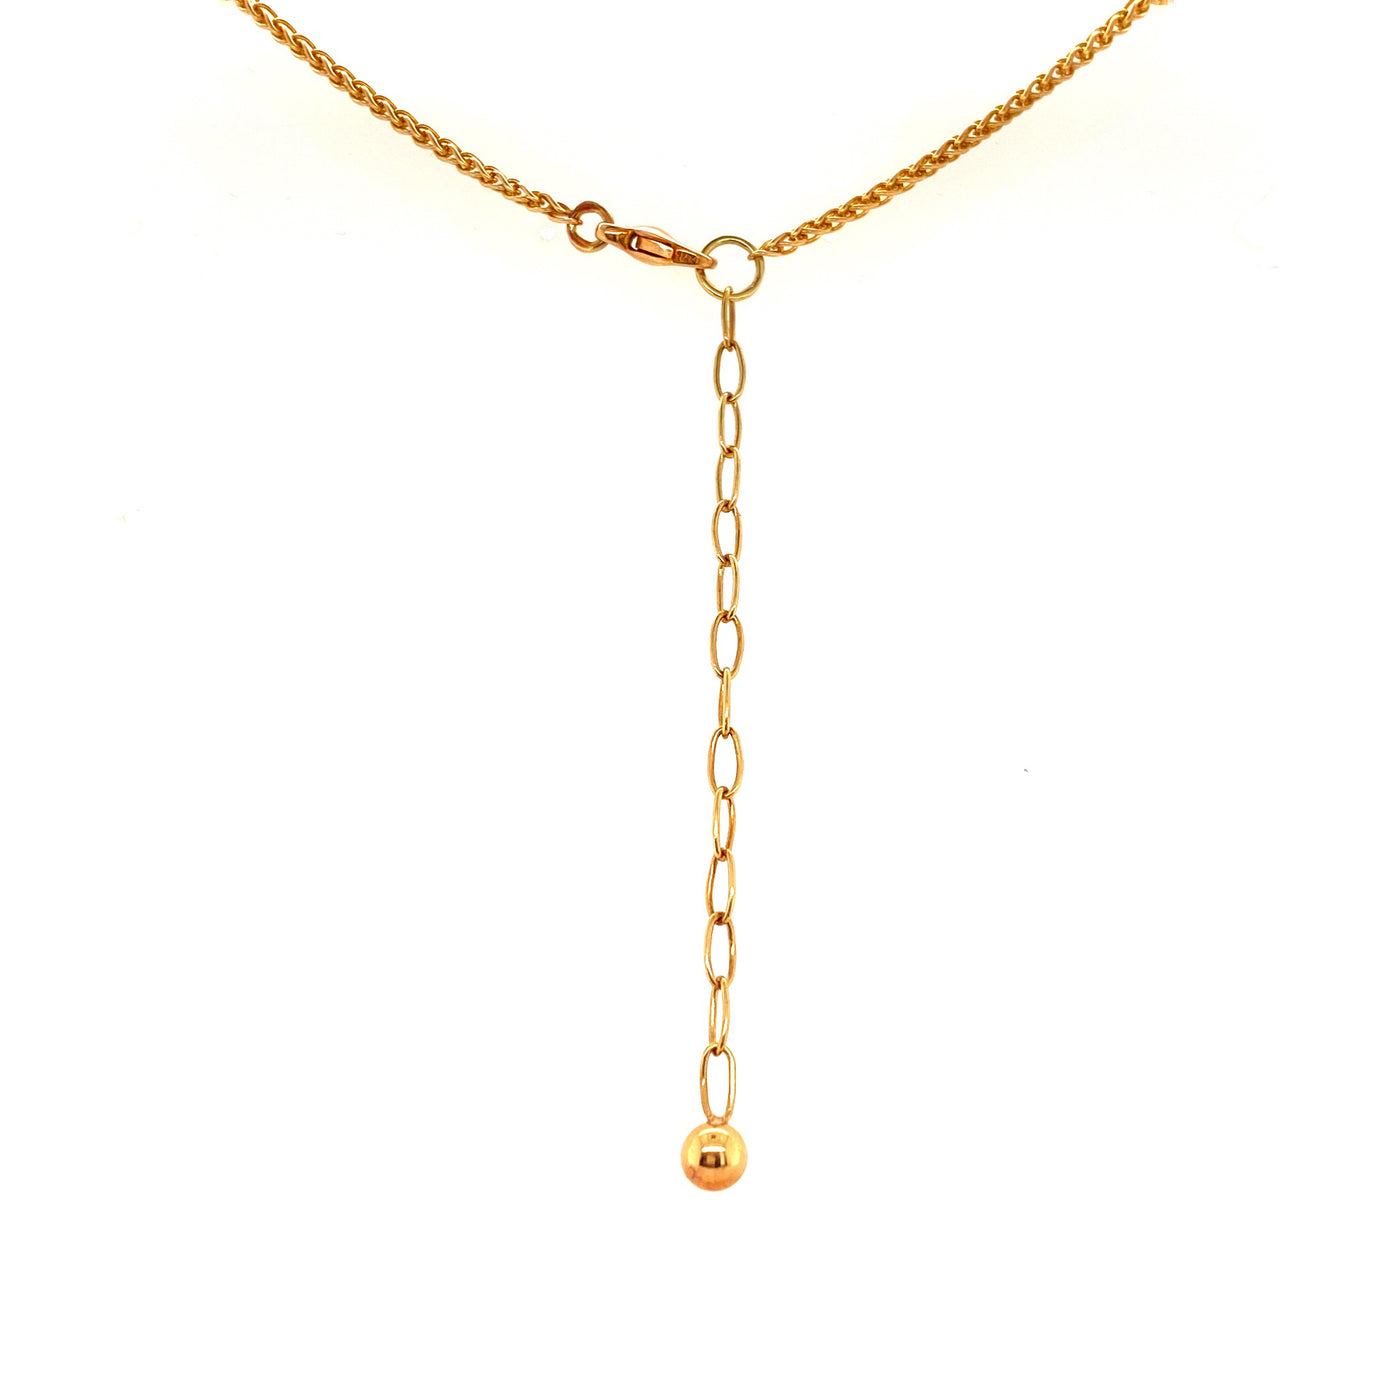 Chain & Pendulum - Interessante Goldkette